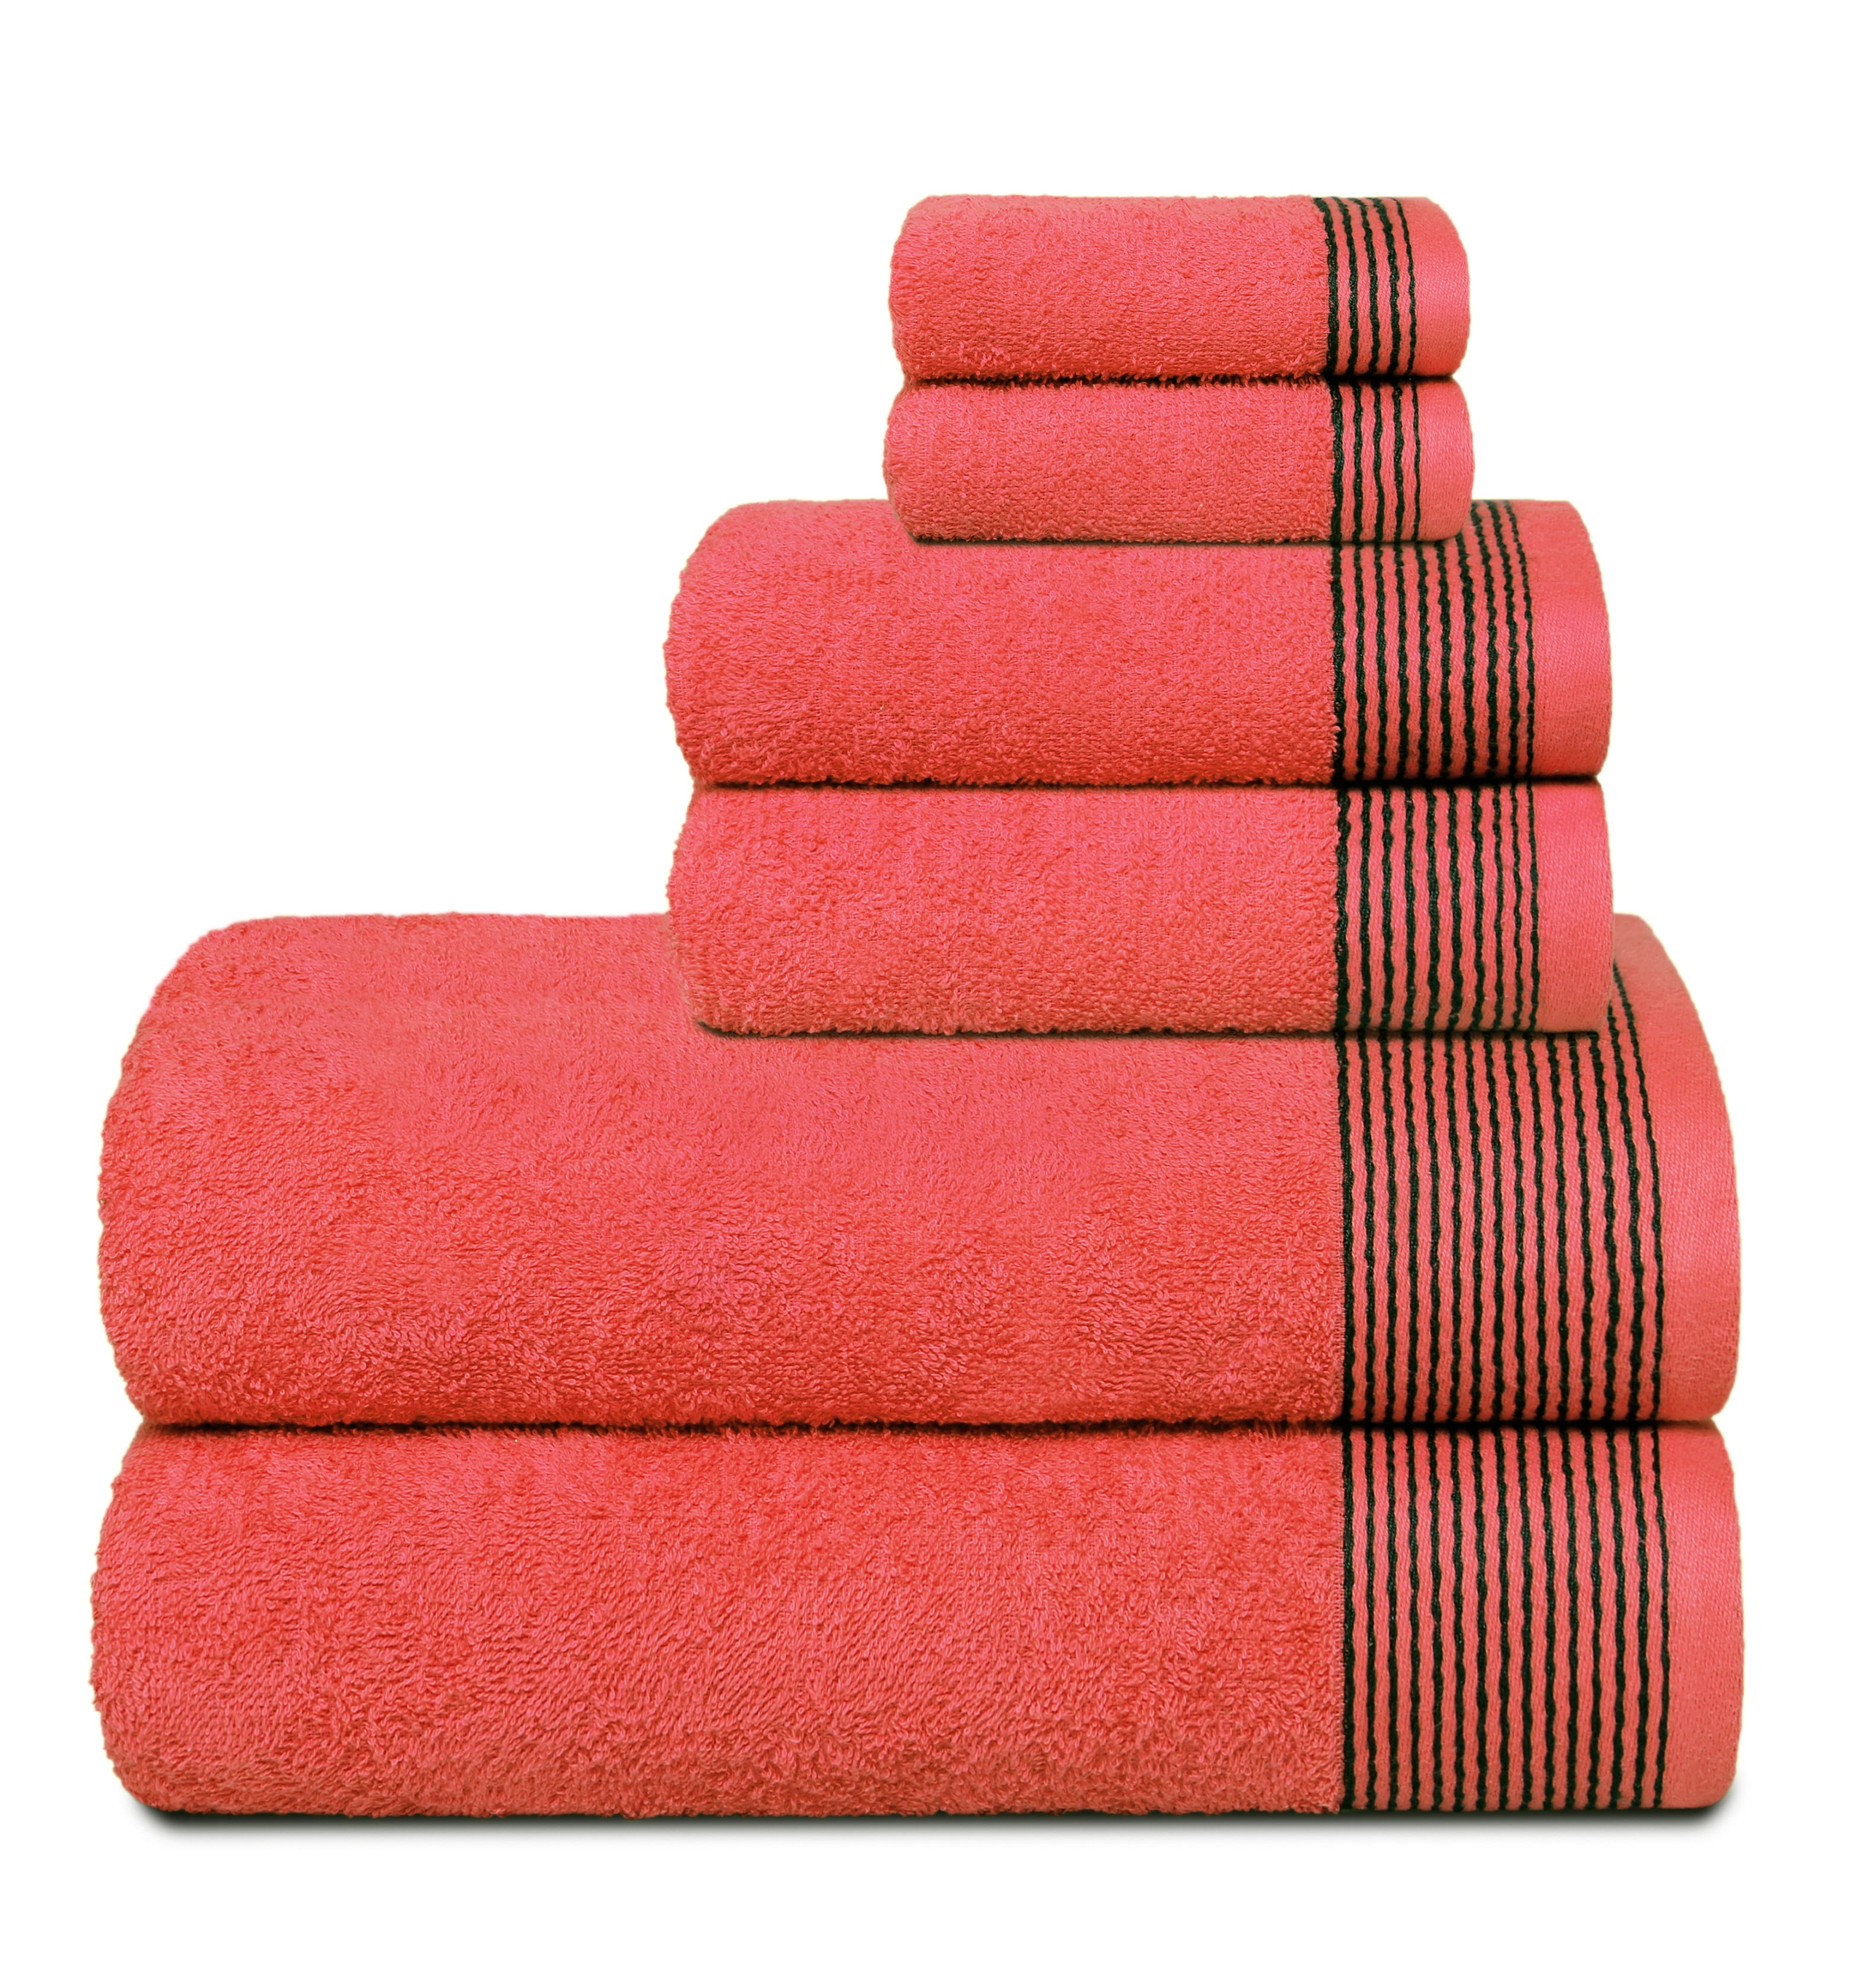 ClearloveWL Bath towel, Stripe Towel Set Face Towel Large Thick Bath Spa  Sports Towel Home 100% Cotton Bathroom For Adults Kids Hotel Bath Towel  (Color : Red, Size : 1pcs 34x75cm) 